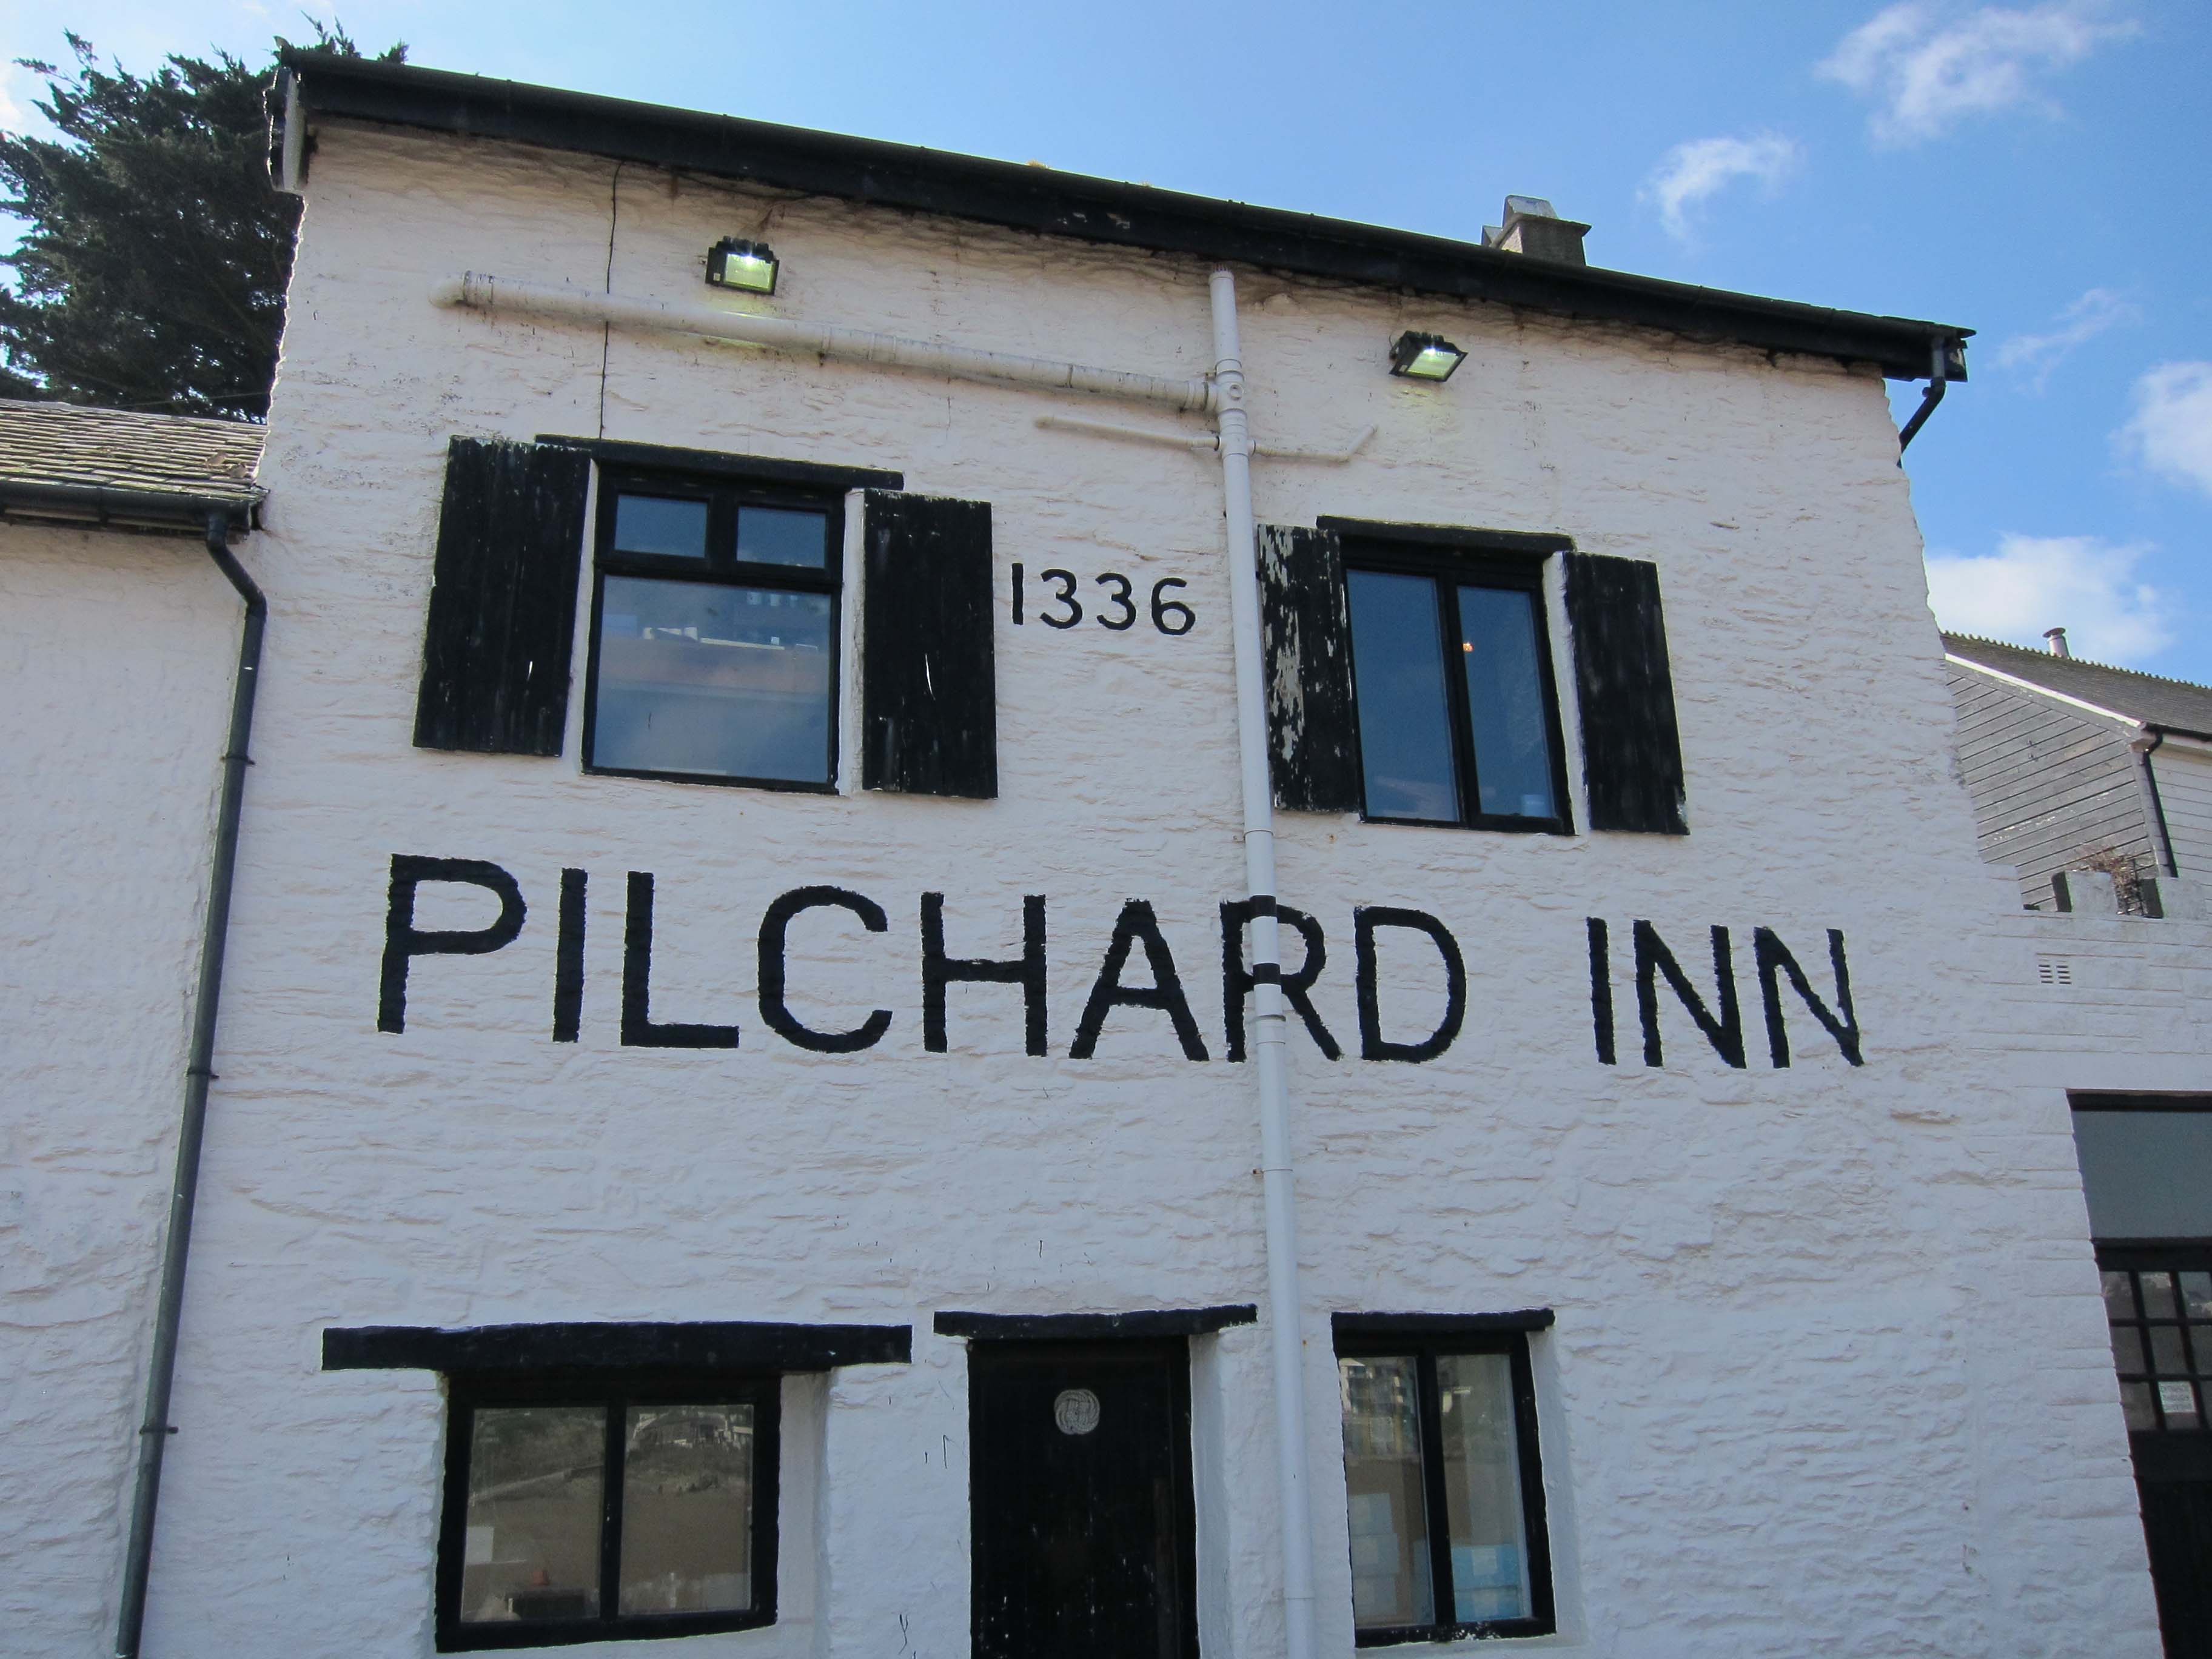 Pilchard Inn, Burgh Island